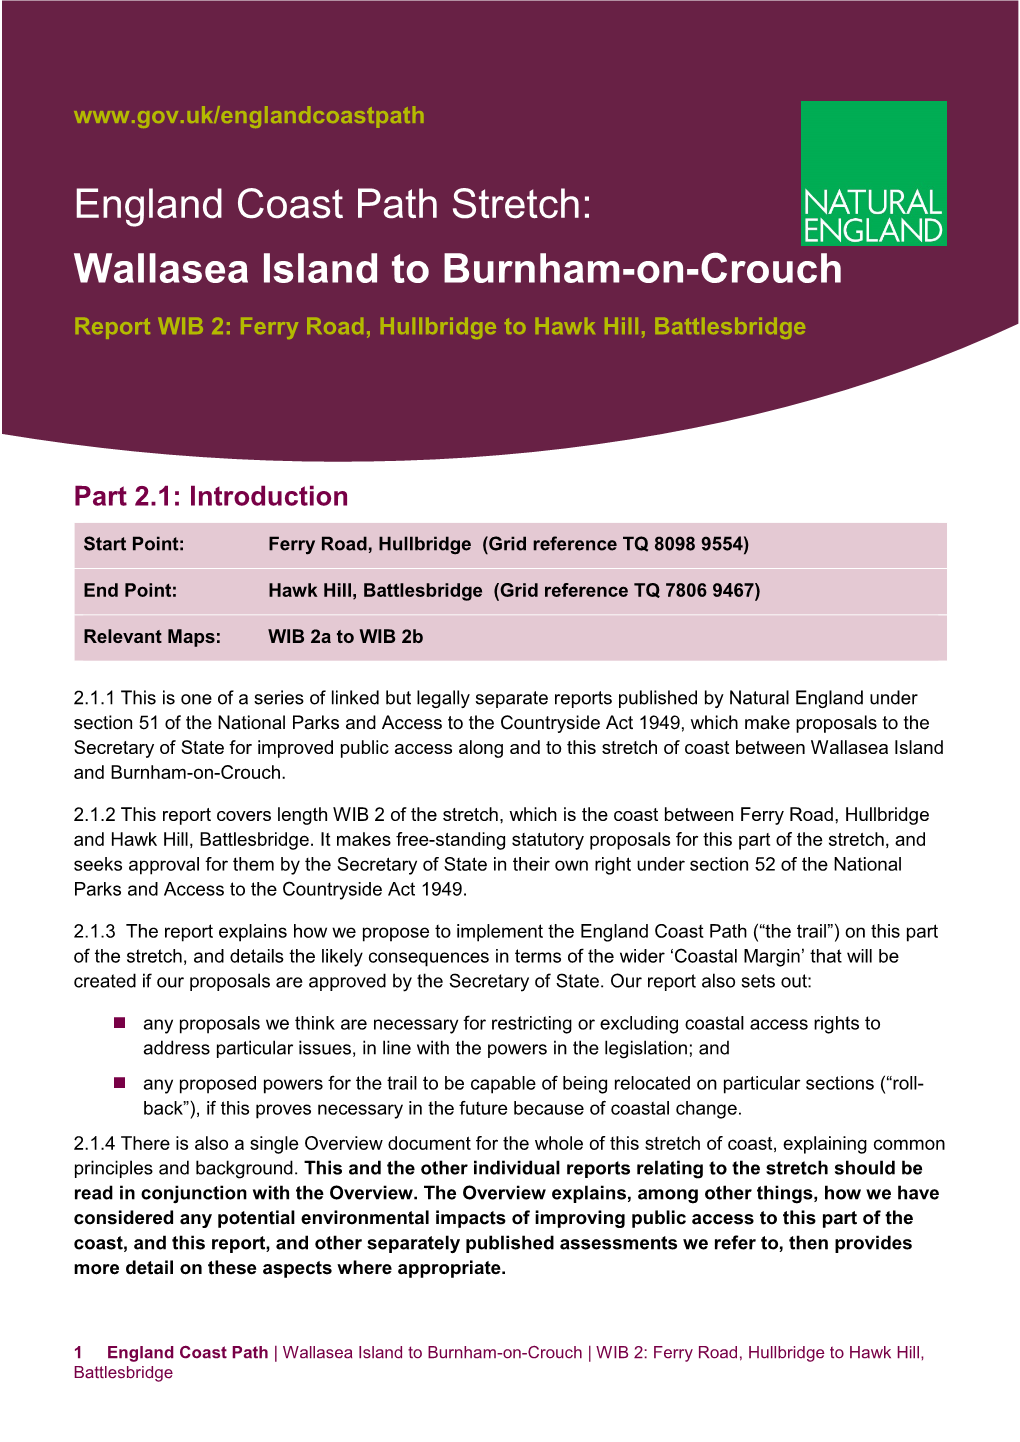 England Coast Path Stretch Wallsea Island to Burnham-On-Crouch Report 2